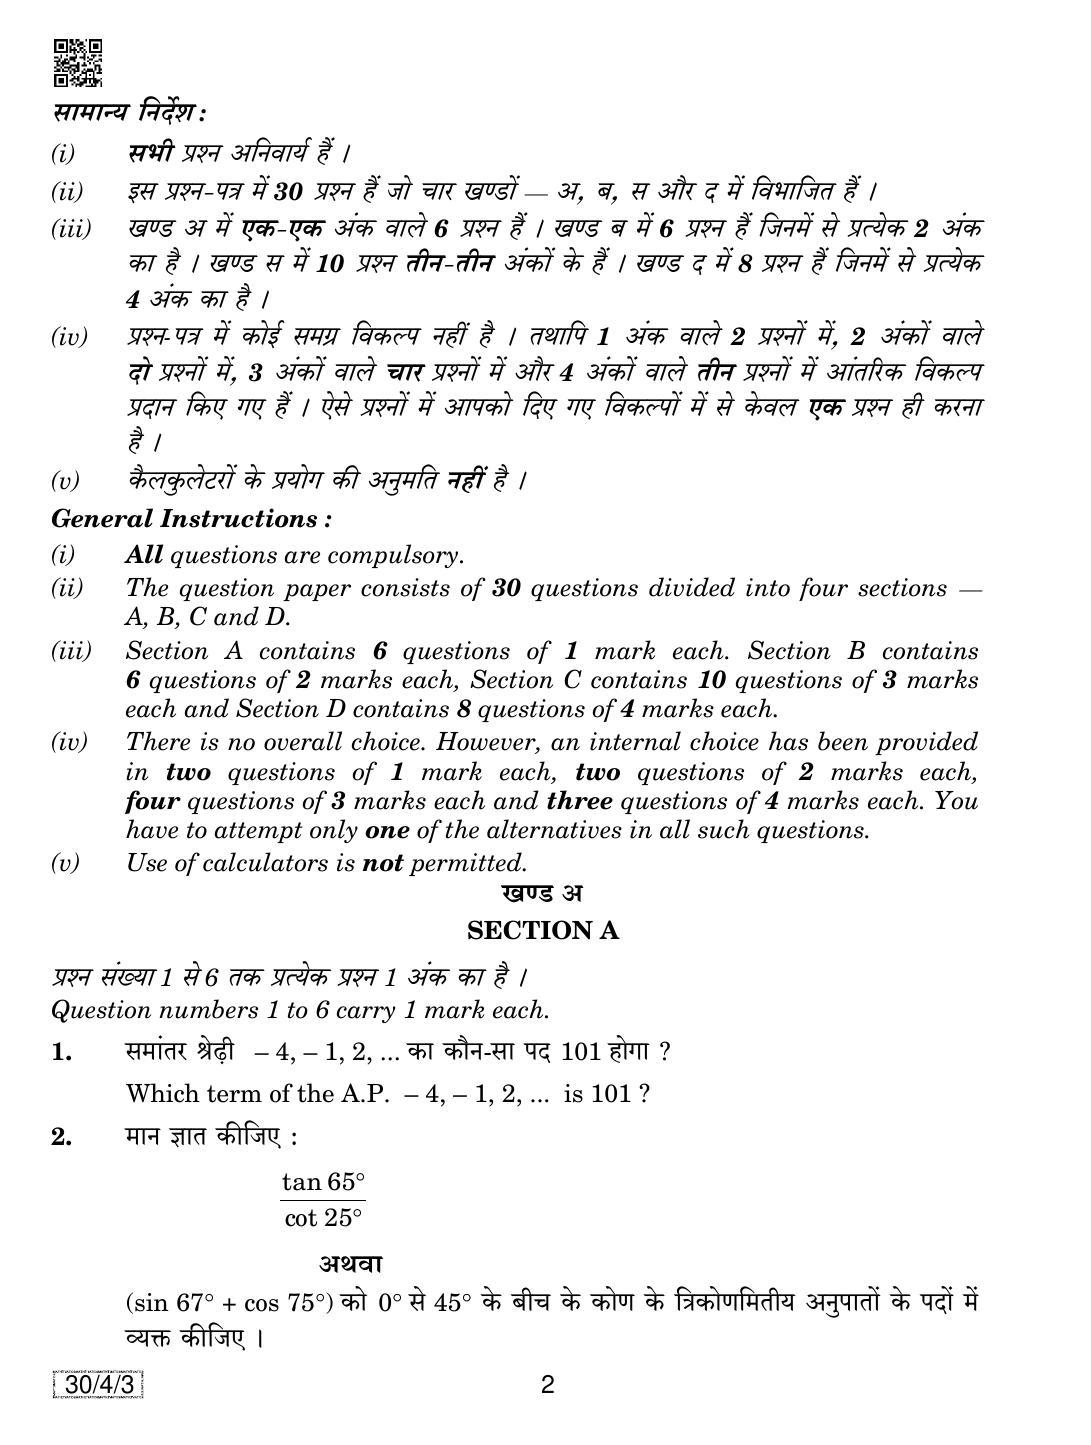 CBSE Class 10 30-4-3 MATHEMATICS 2019 Question Paper - Page 2